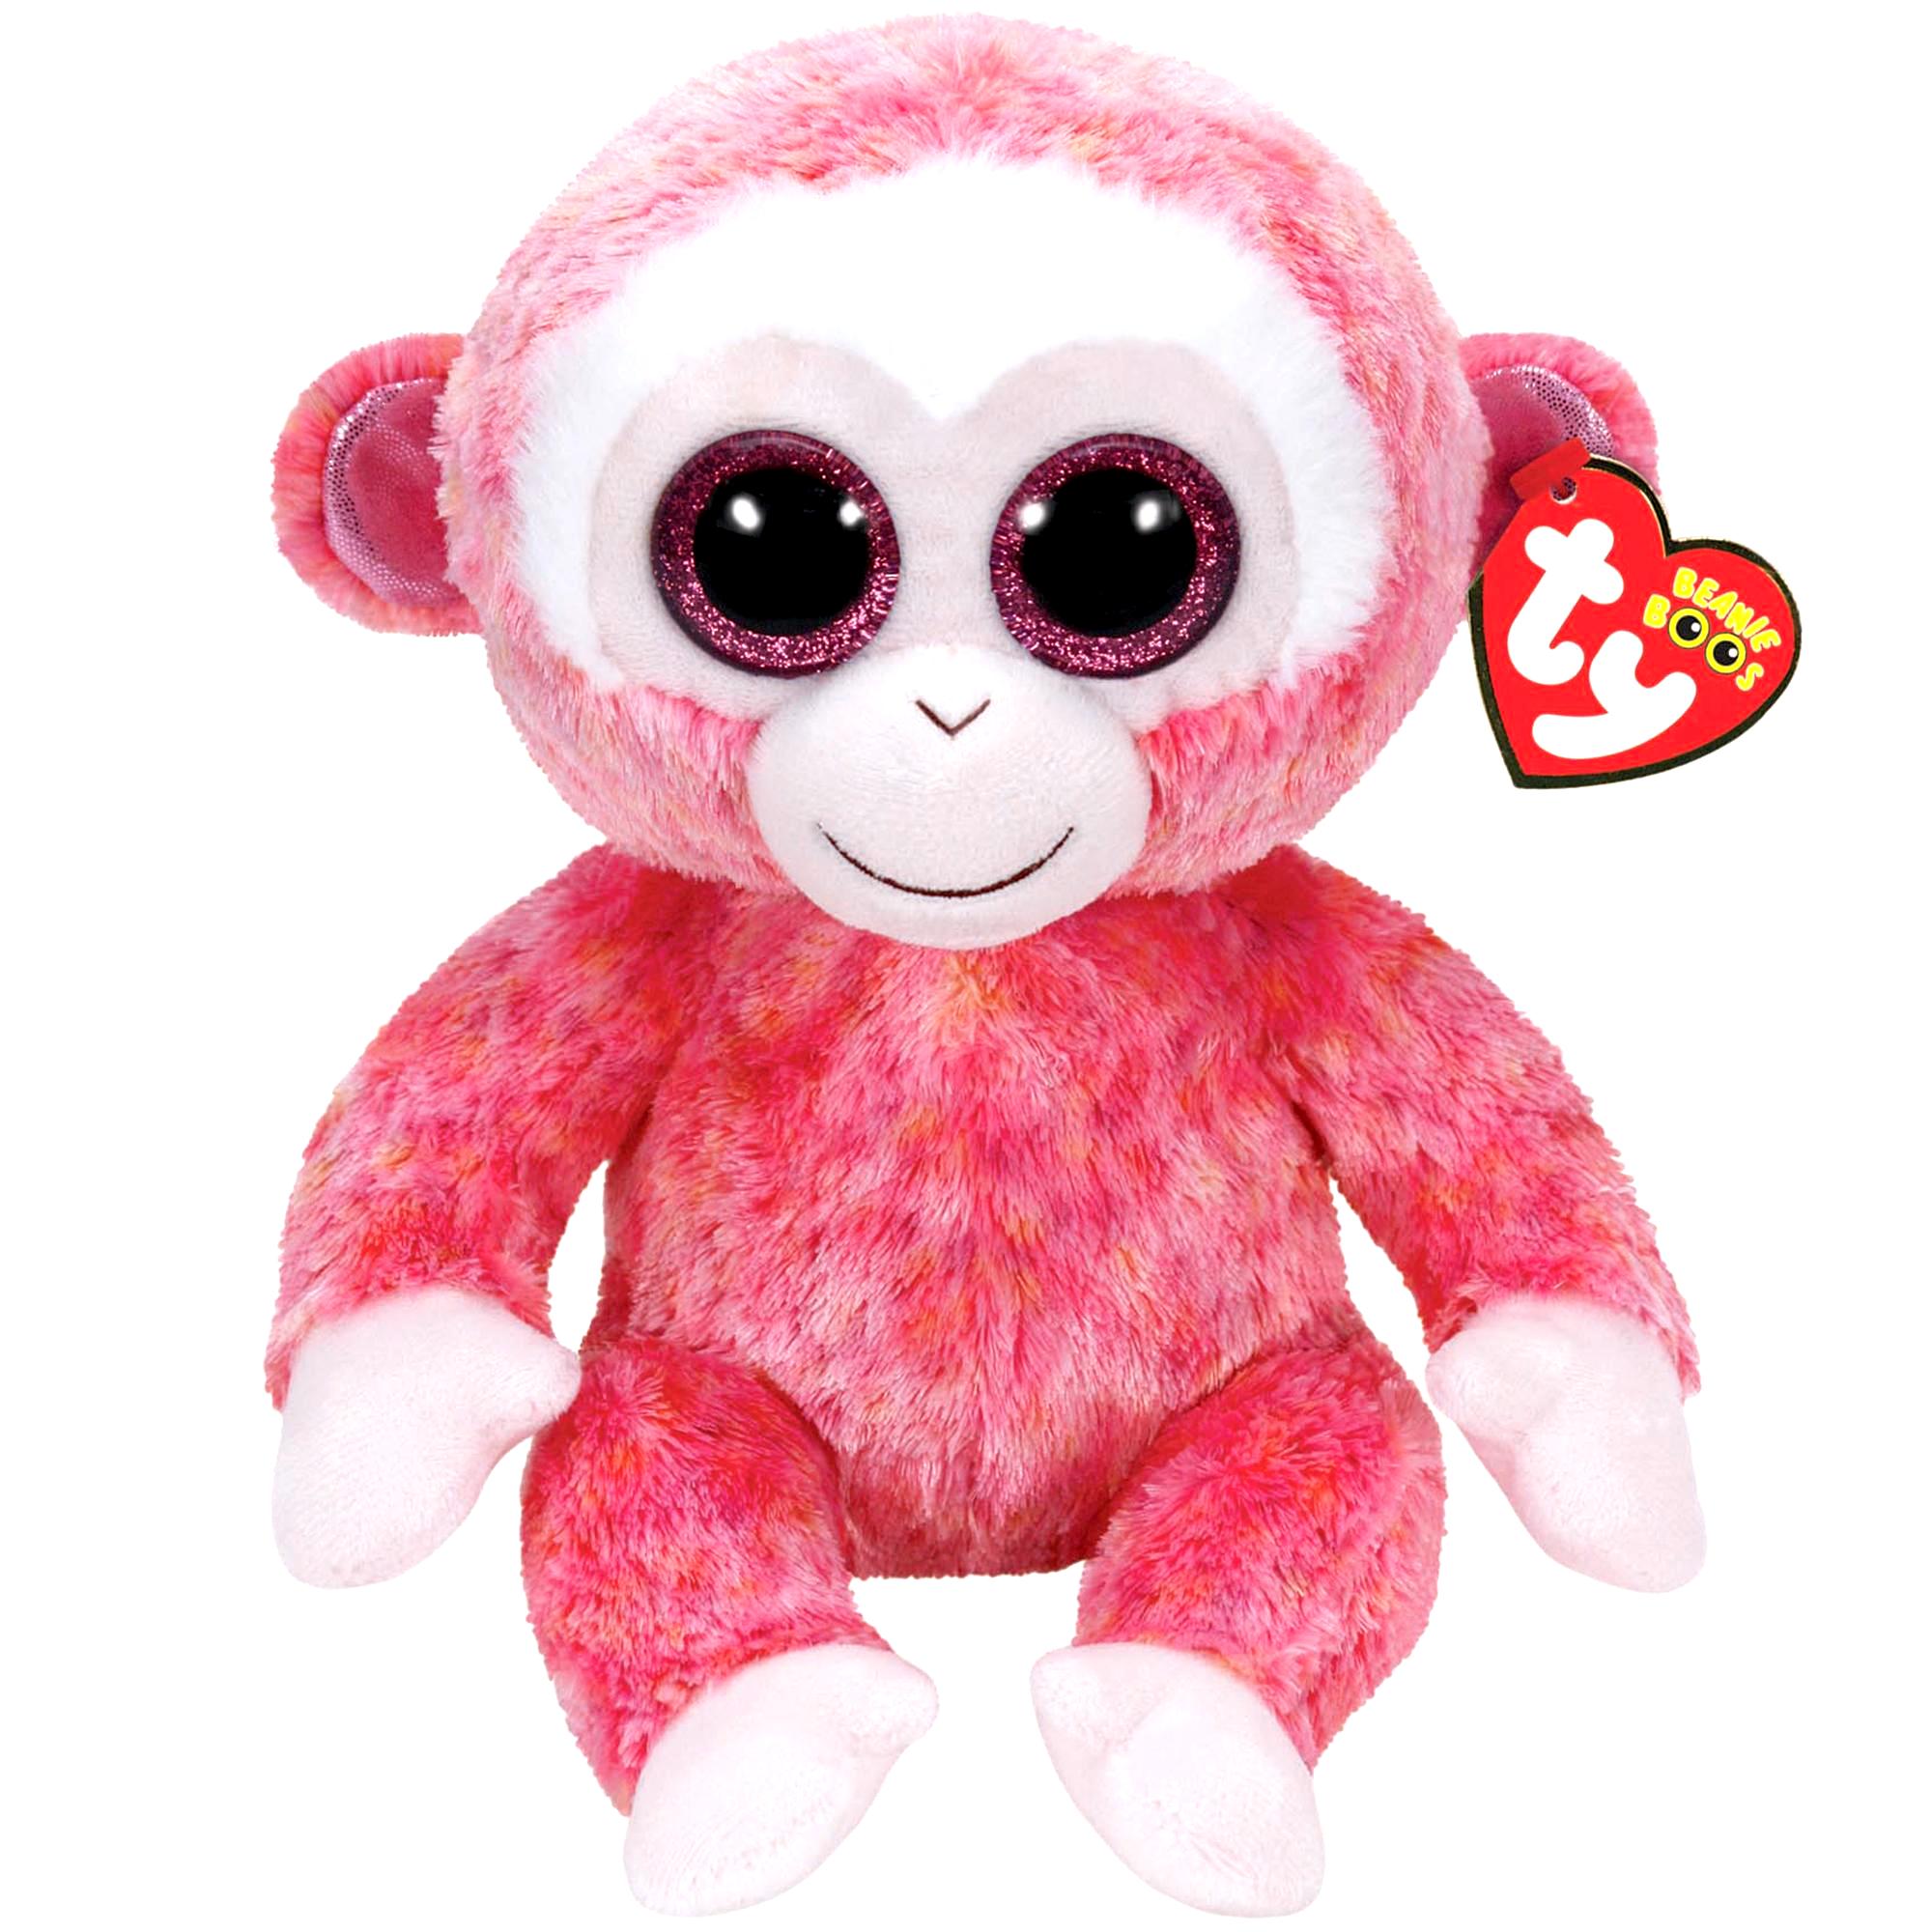 6 Inch NEW MWMT Ty Beanie Boos ~ RUBY the Pink Monkey 